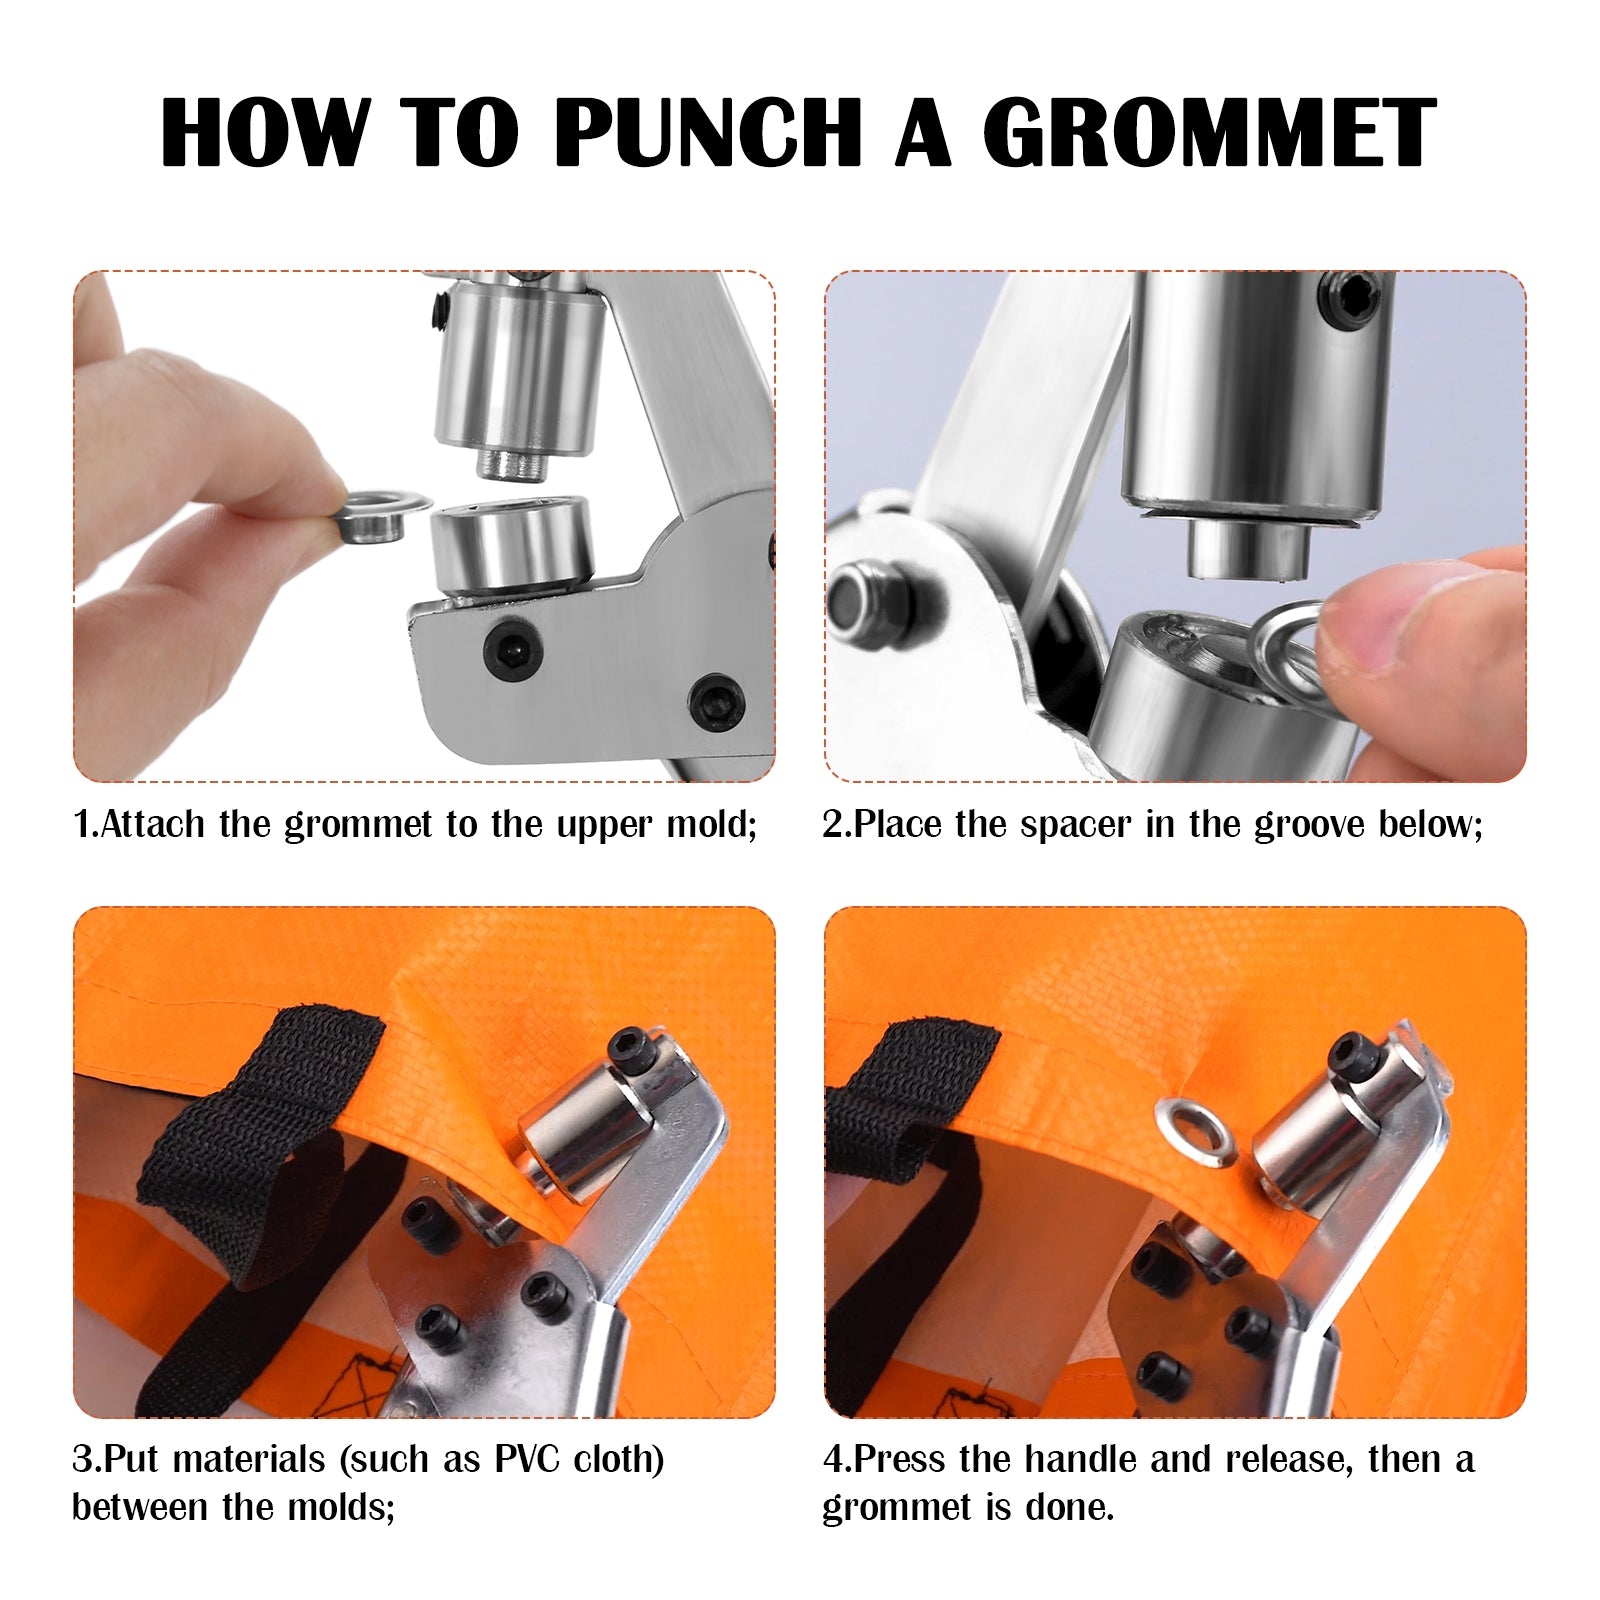 BEAMNOVA Grommet Handheld Hole Punch Pliers Grommet Machine Hand Press Tool w/ 500 Silv